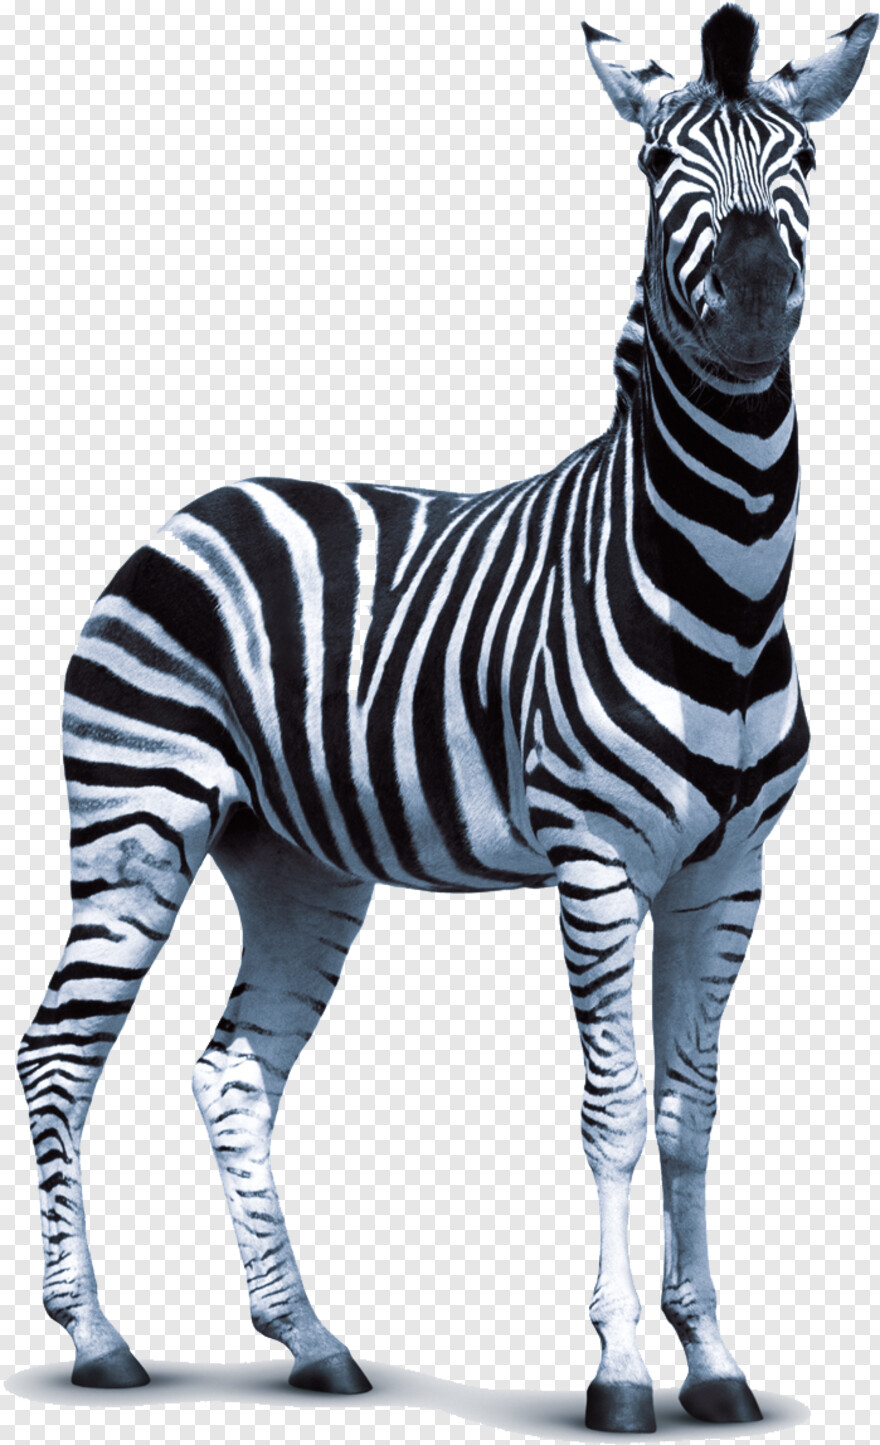 zebra # 656675